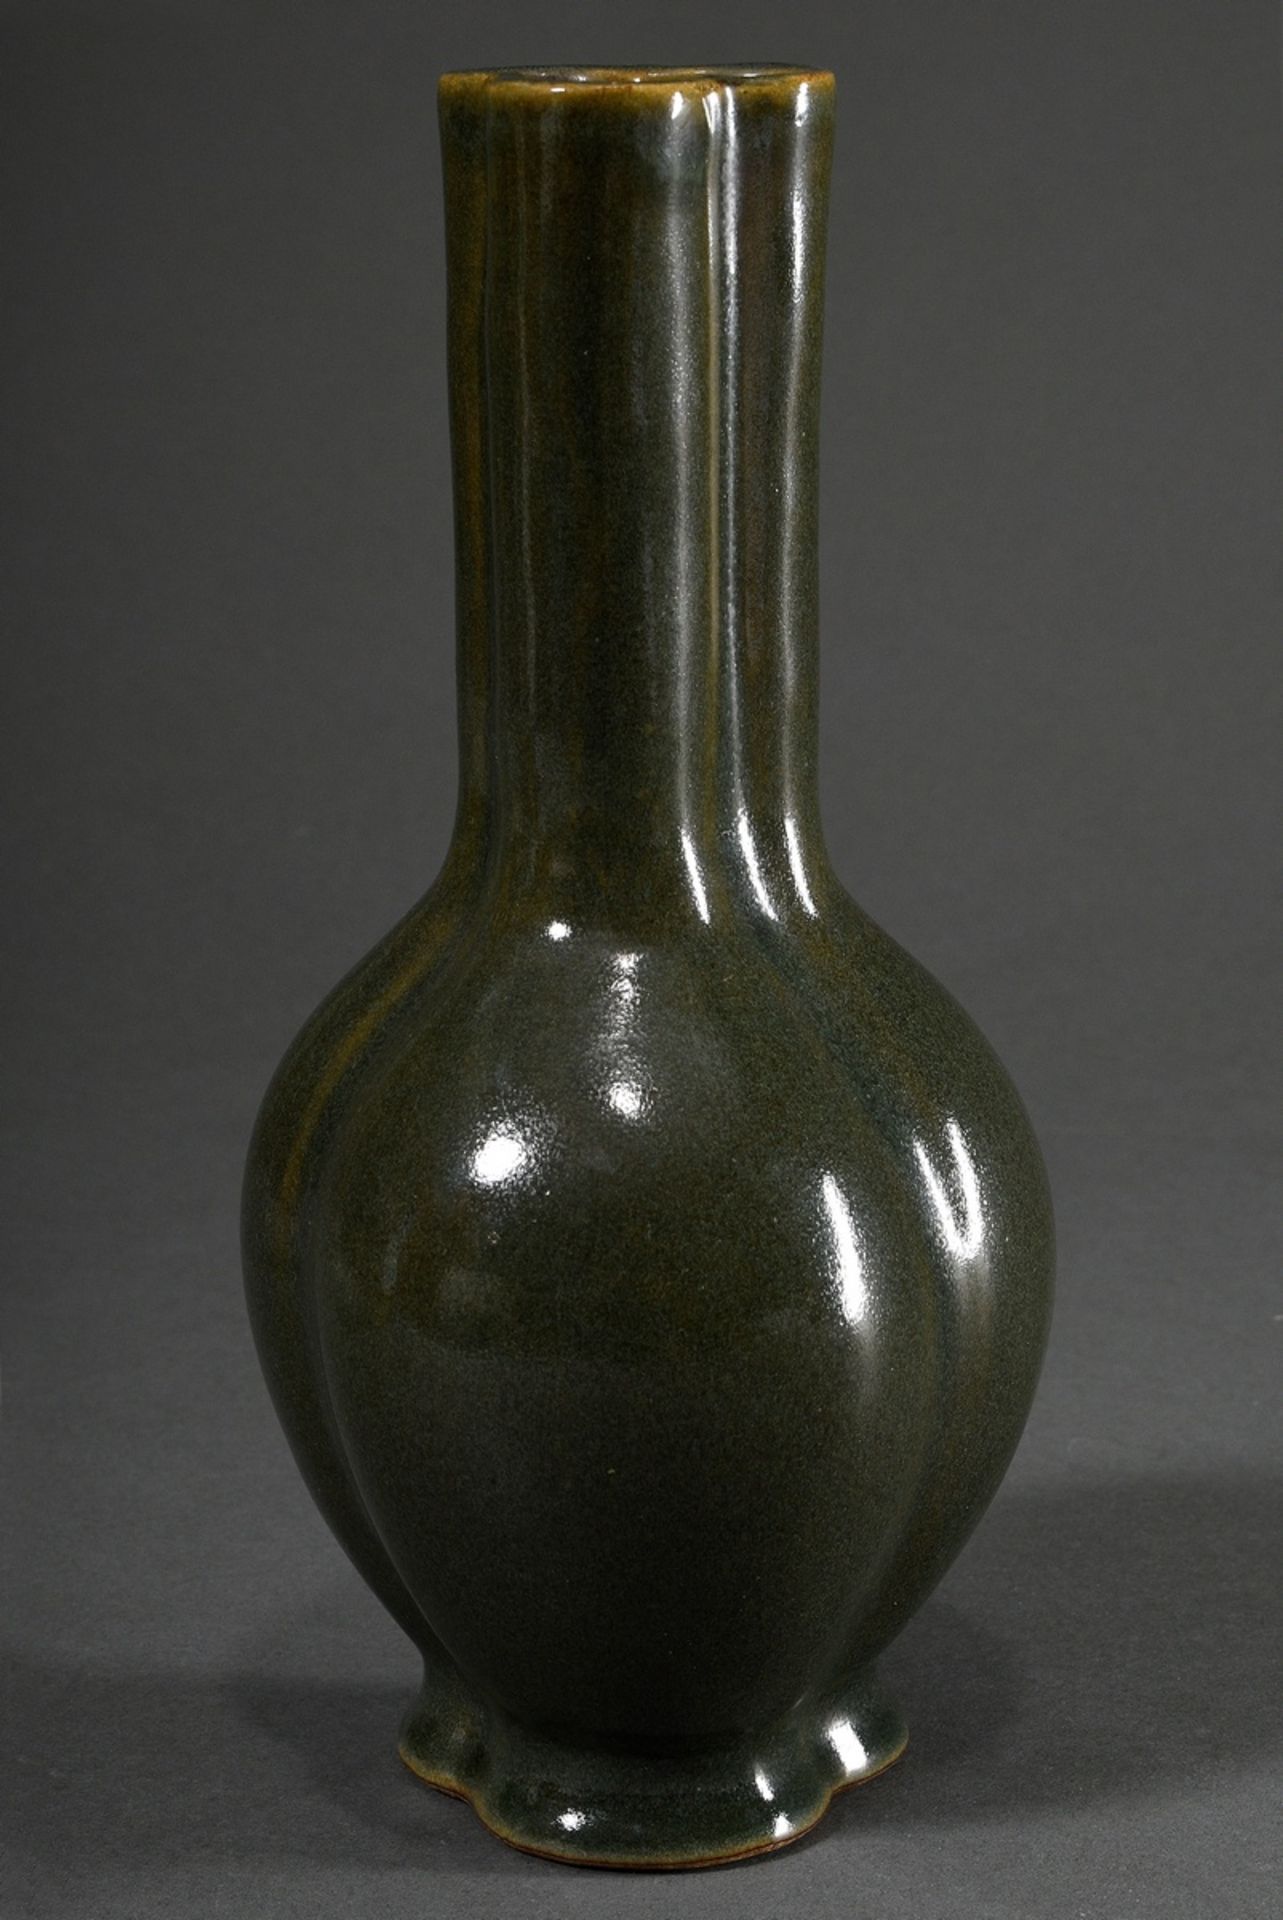 Dreipassige Keramik Vase mit dunkler Teadust Glasur, China, Qing Dynastie, H. 25,4cm